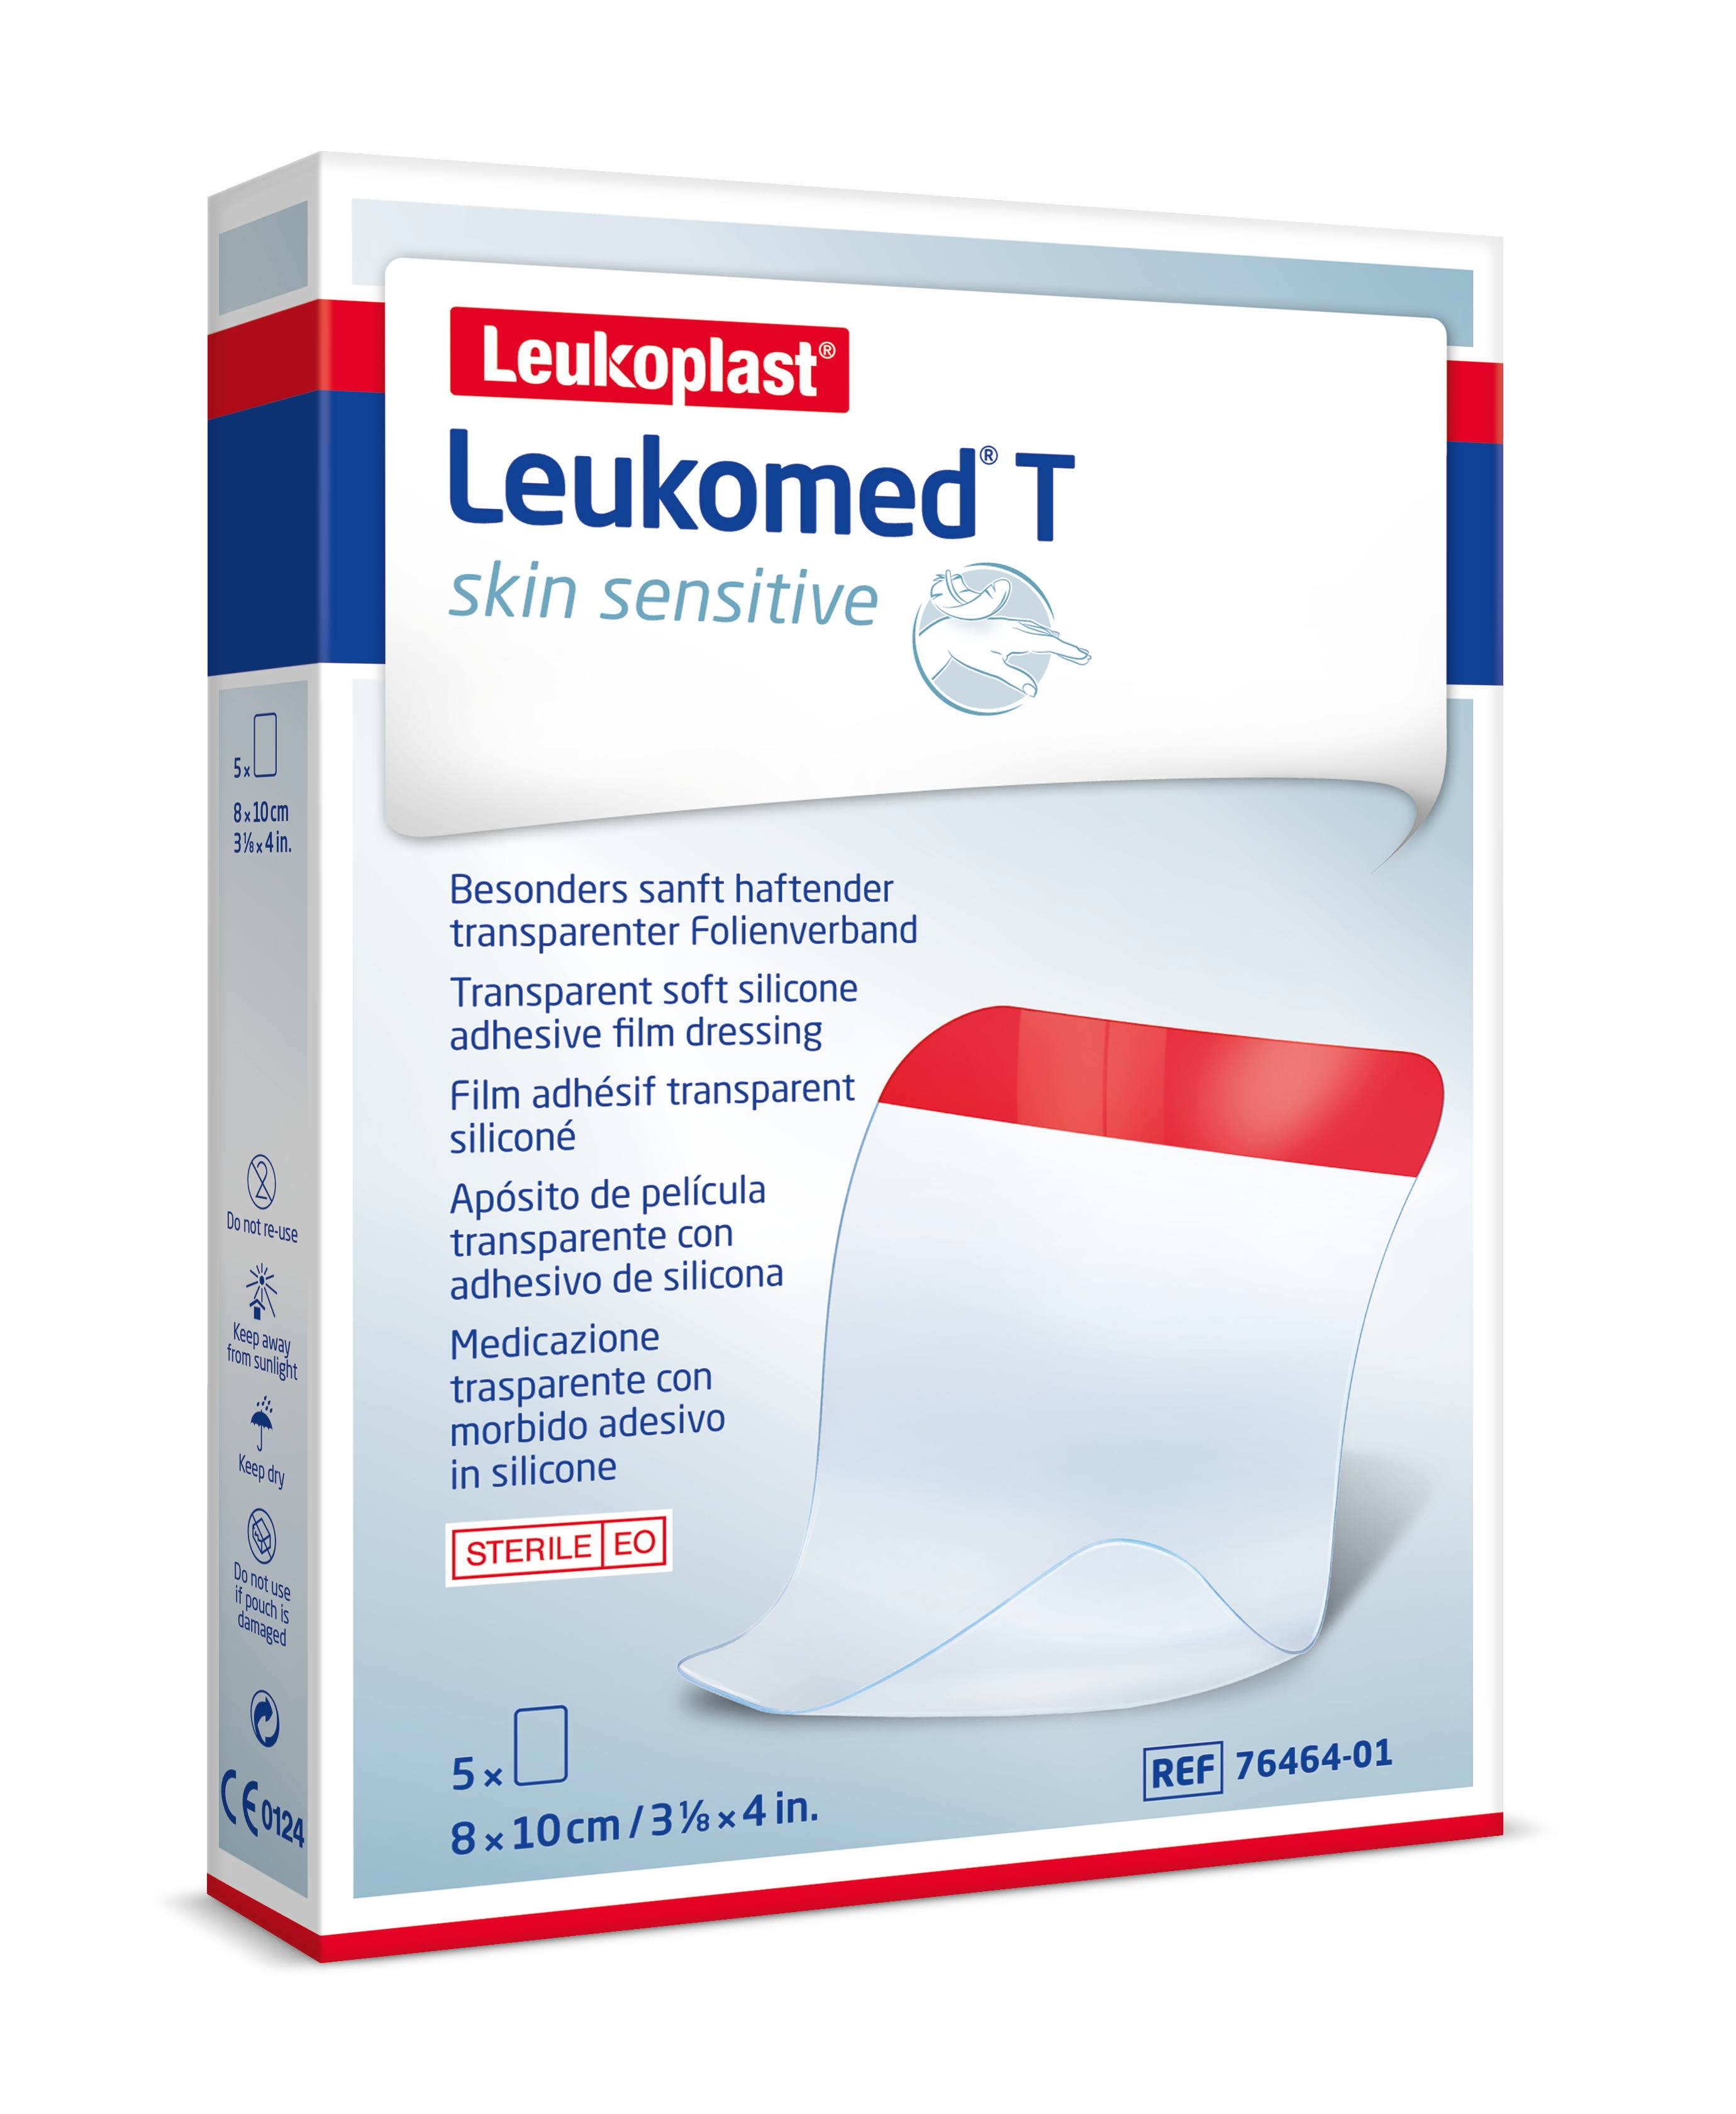 Leukomed T Skin Sensitive